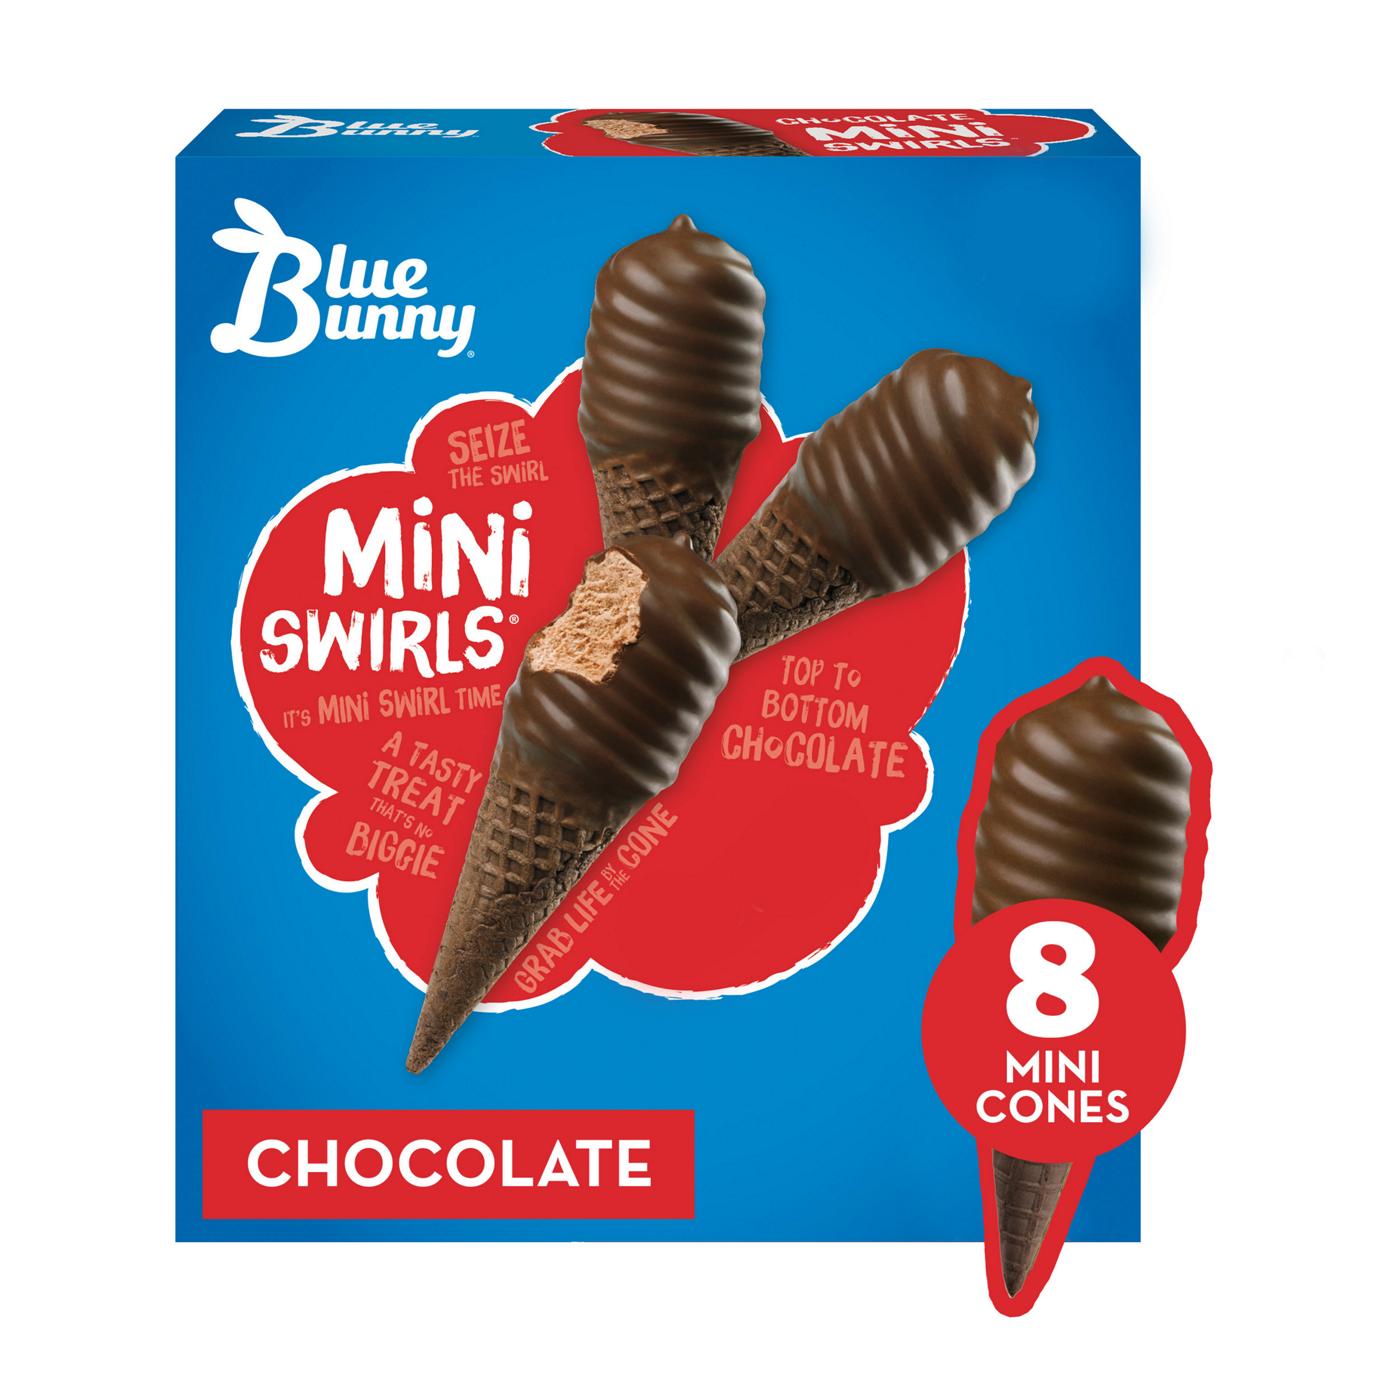 Blue Bunny Mini Swirls Chocolate Ice Cream Cones; image 1 of 2